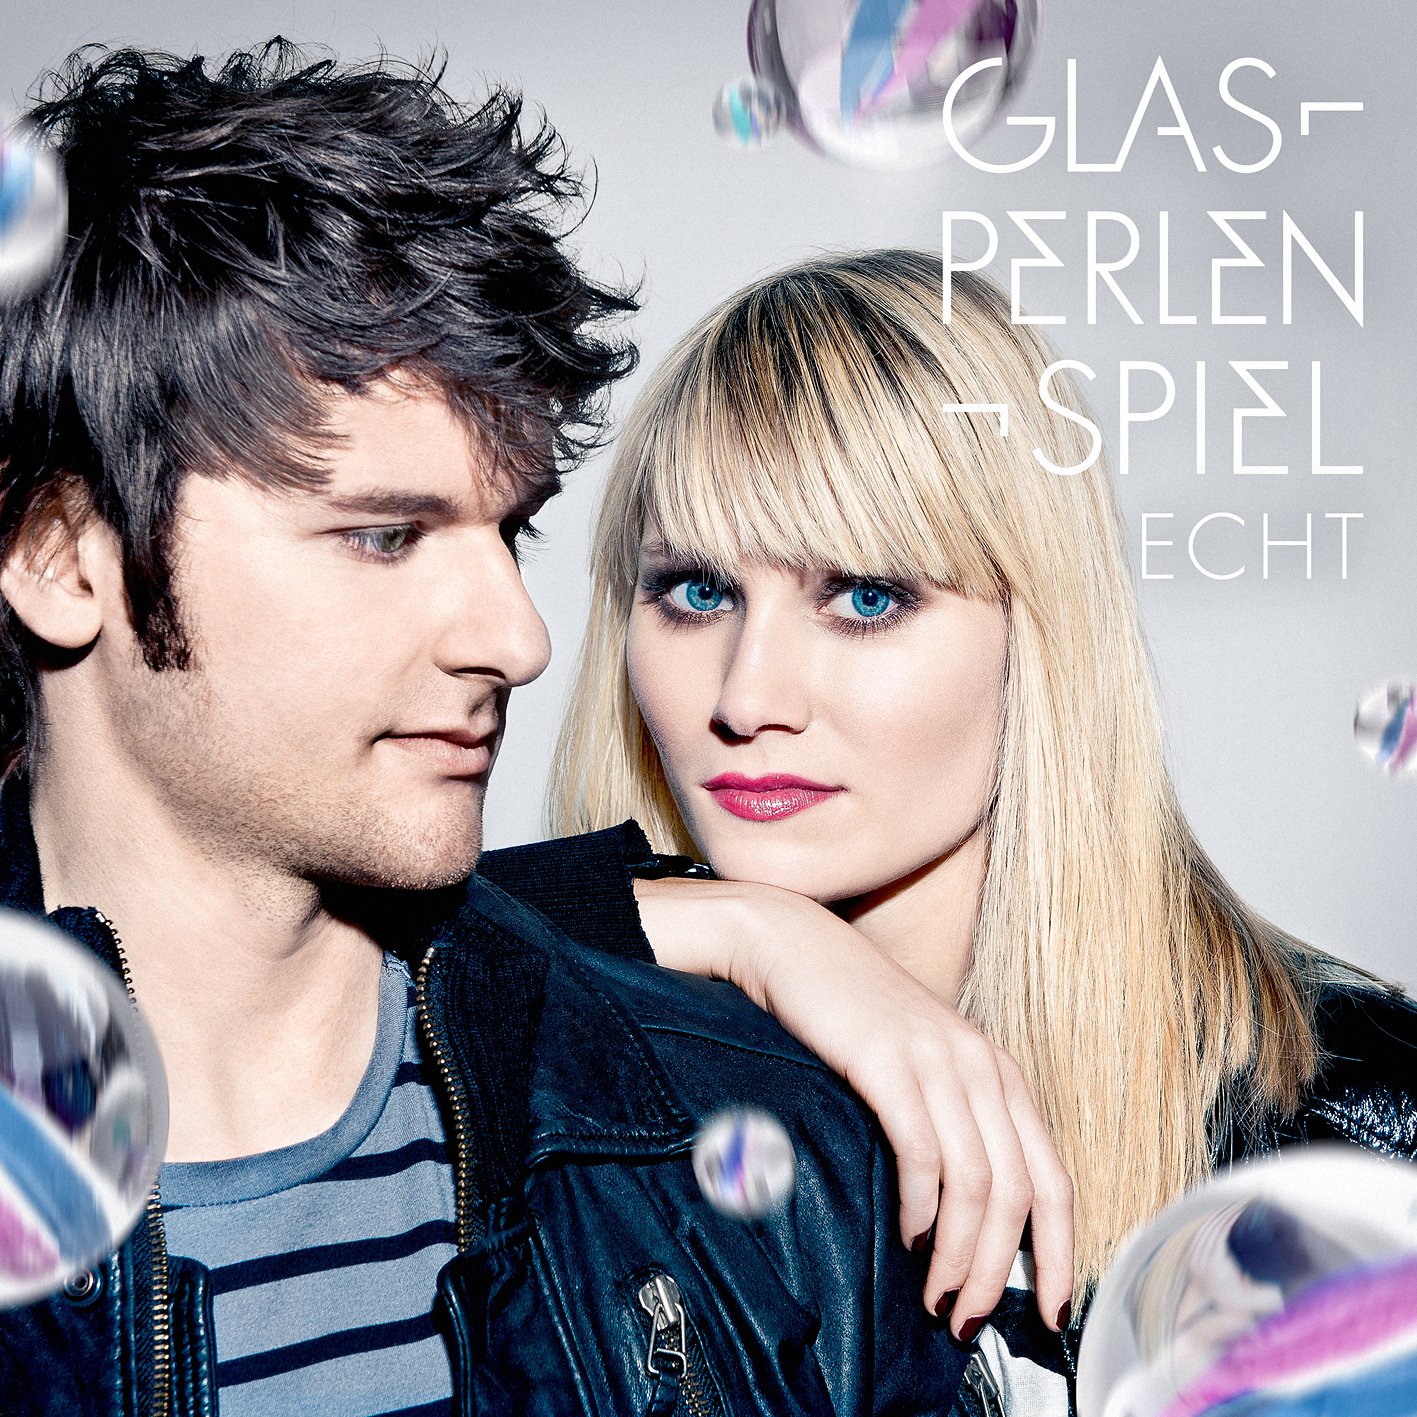 Glasperlenspiel Echt cover artwork